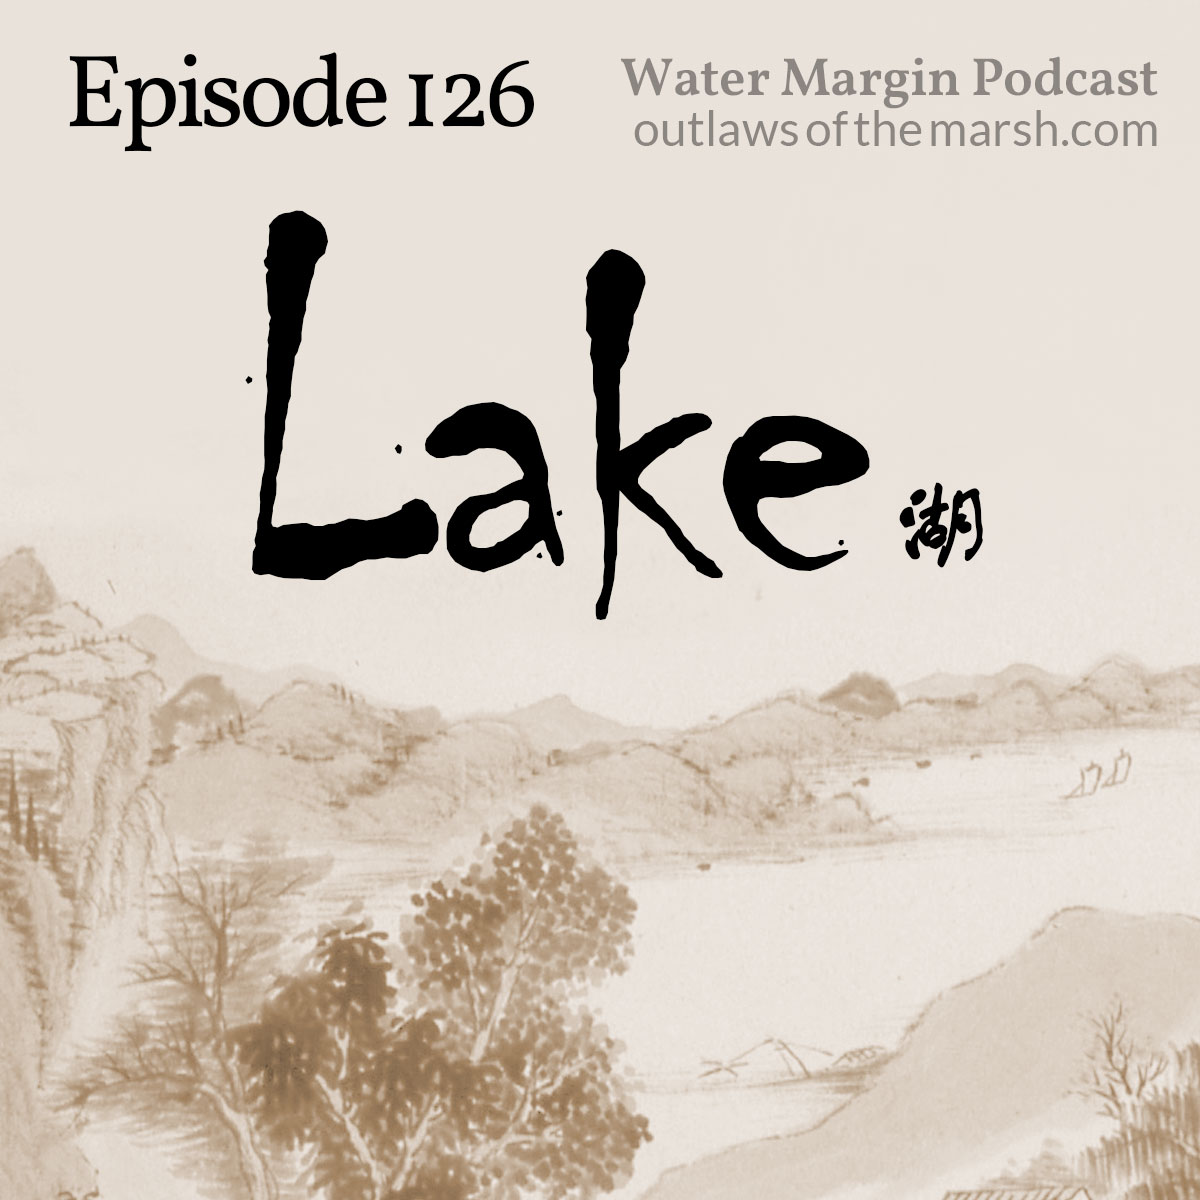 Water Margin Podcast: Episode 126